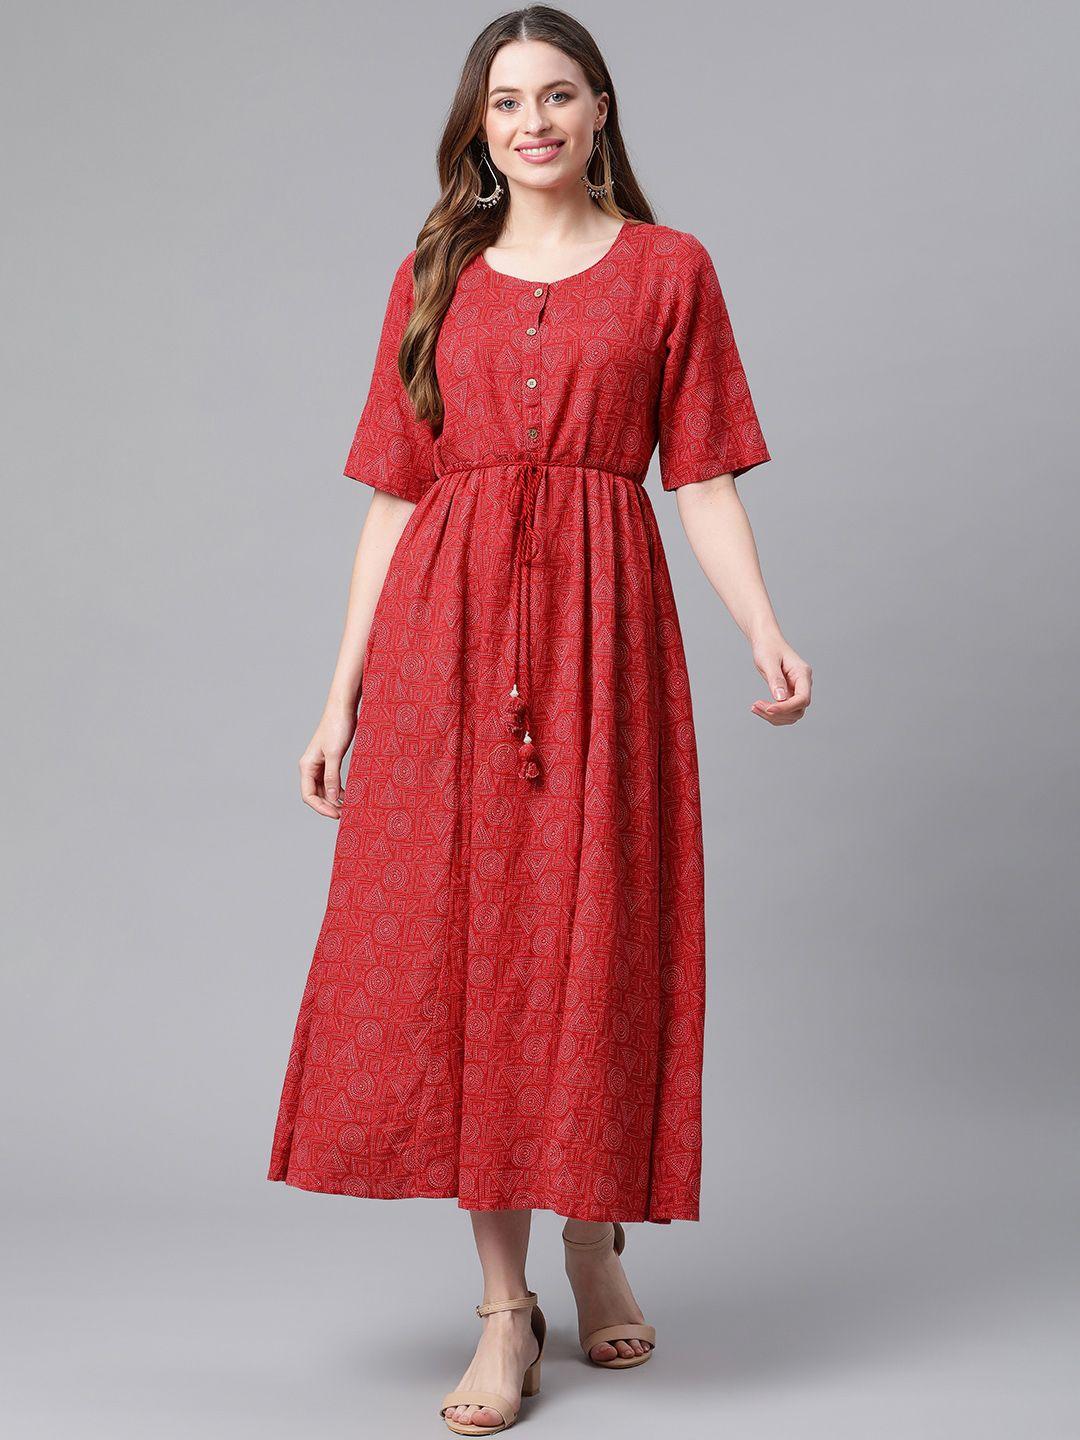 rangriti women red ethnic maxi dress